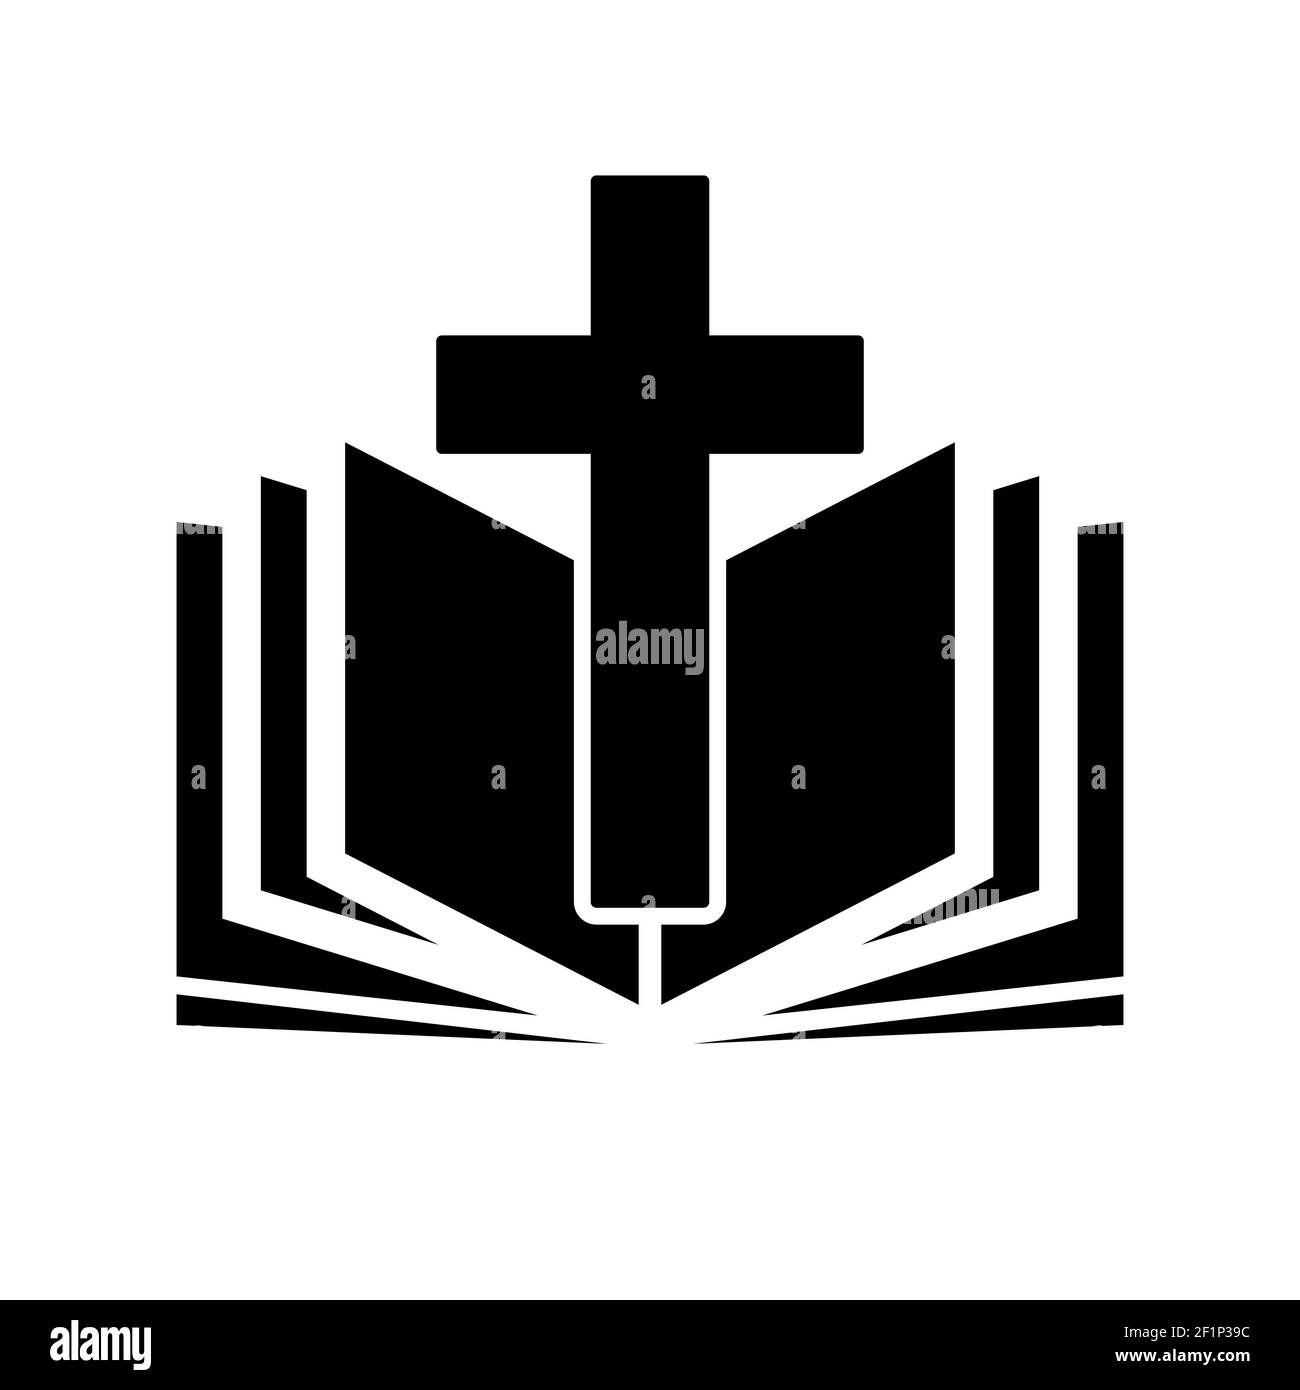 Church logo. Bible with christian cross. Abstract religion symbol. Vector illustration. Stock Vector